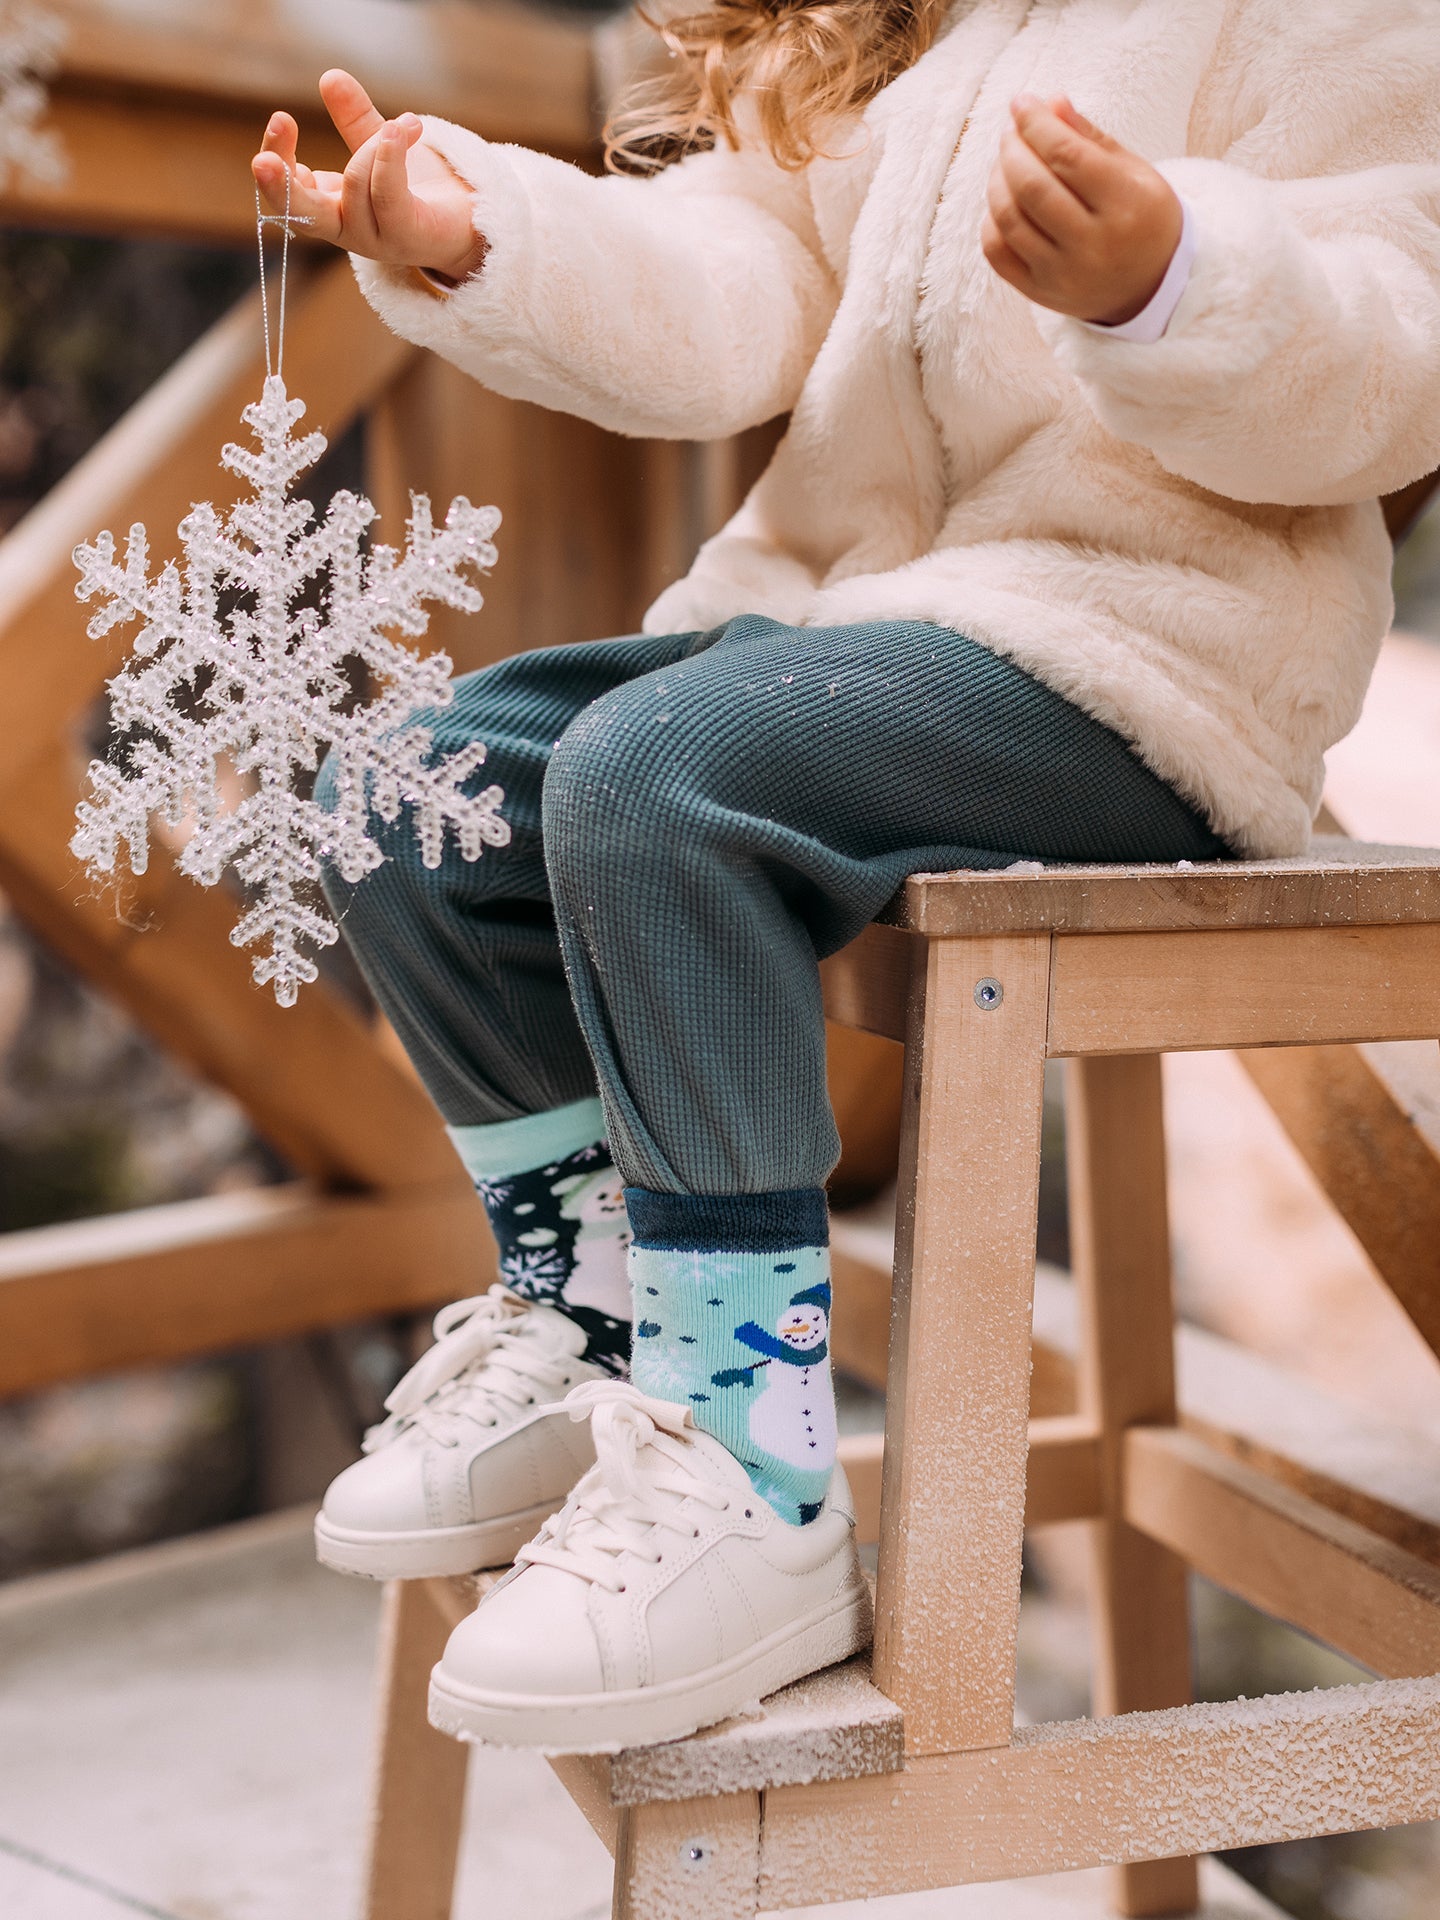 Kids' Warm Socks Joyful Snowman